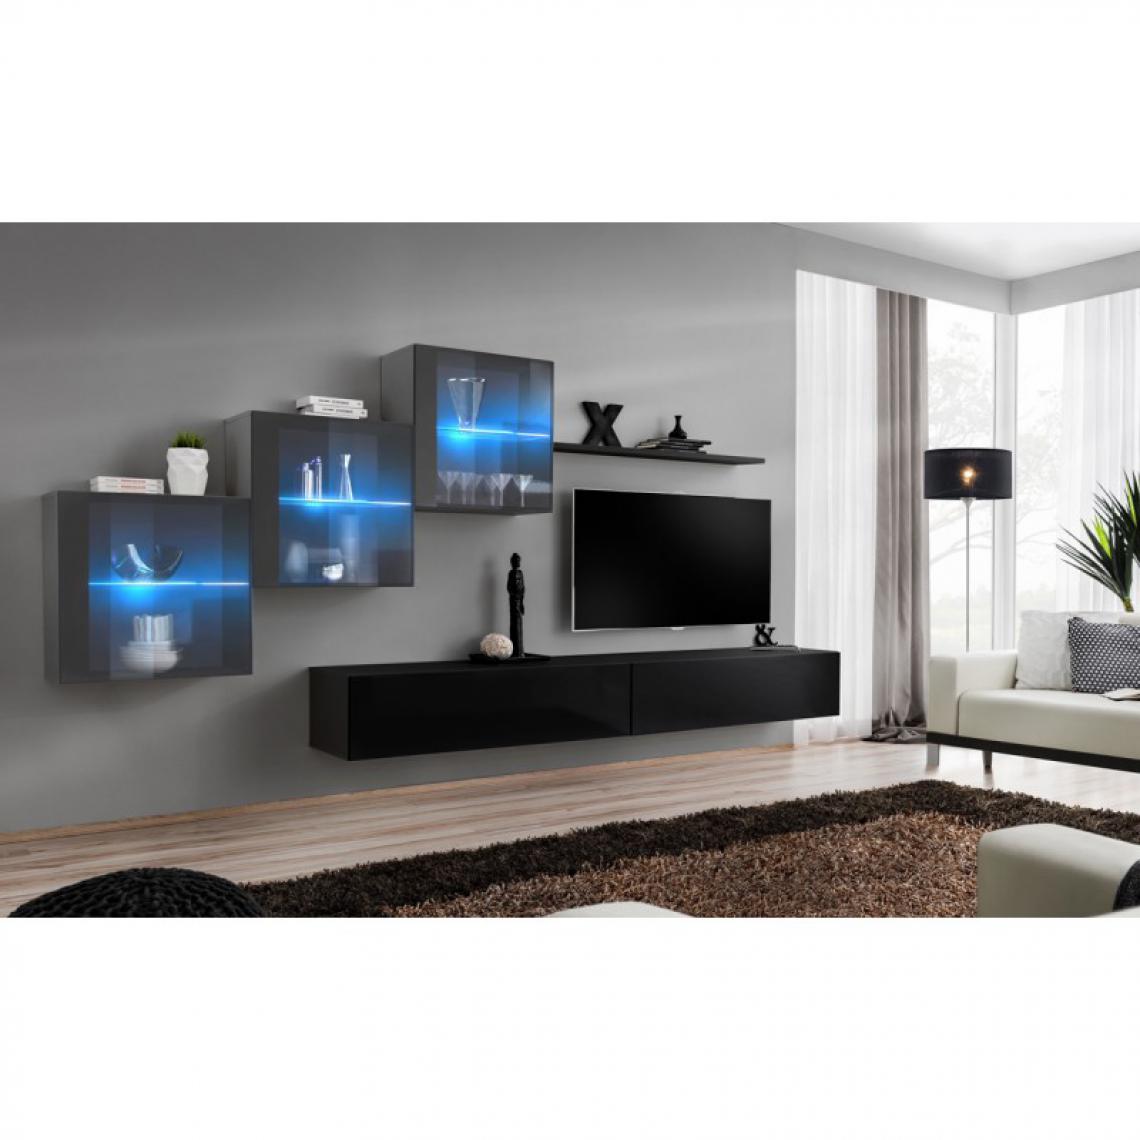 Ac-Deco - Meuble TV Mural Design Switch XX 330cm Noir & Gris - Meubles TV, Hi-Fi